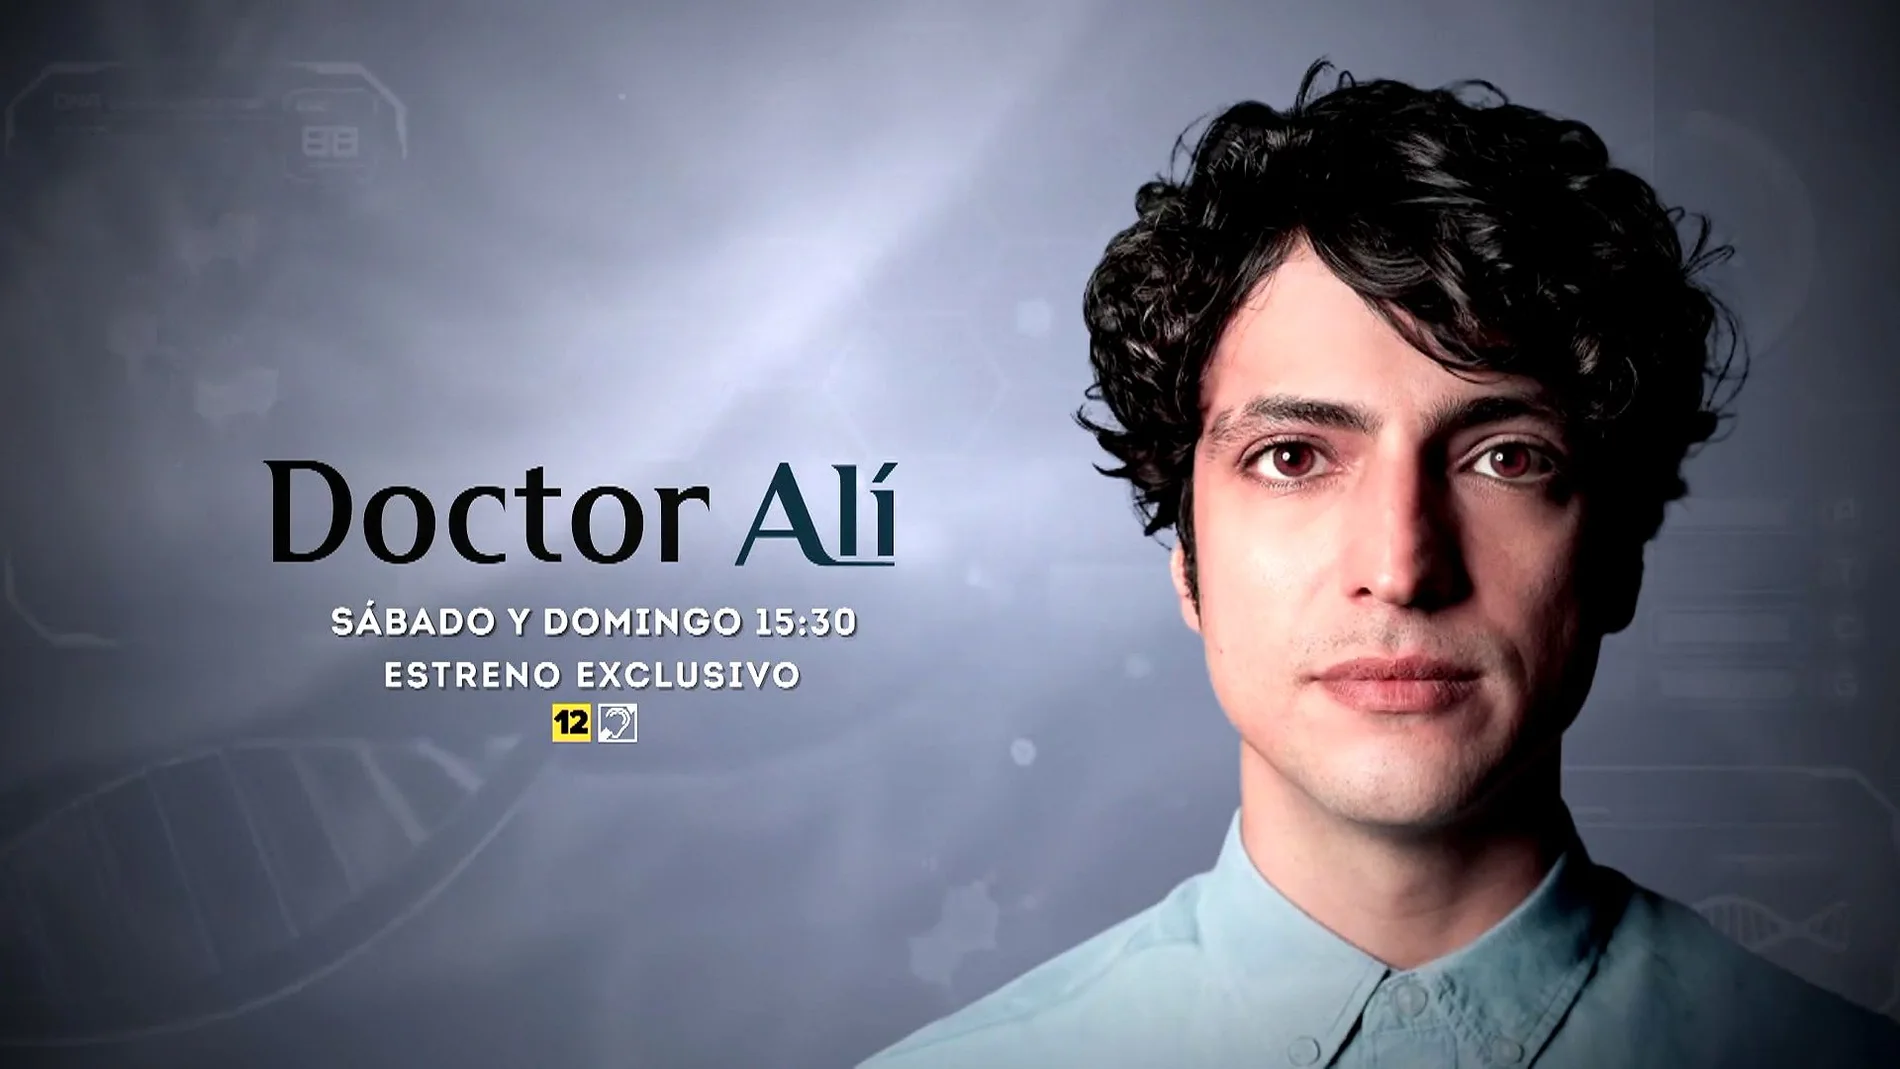 Doctor Alí